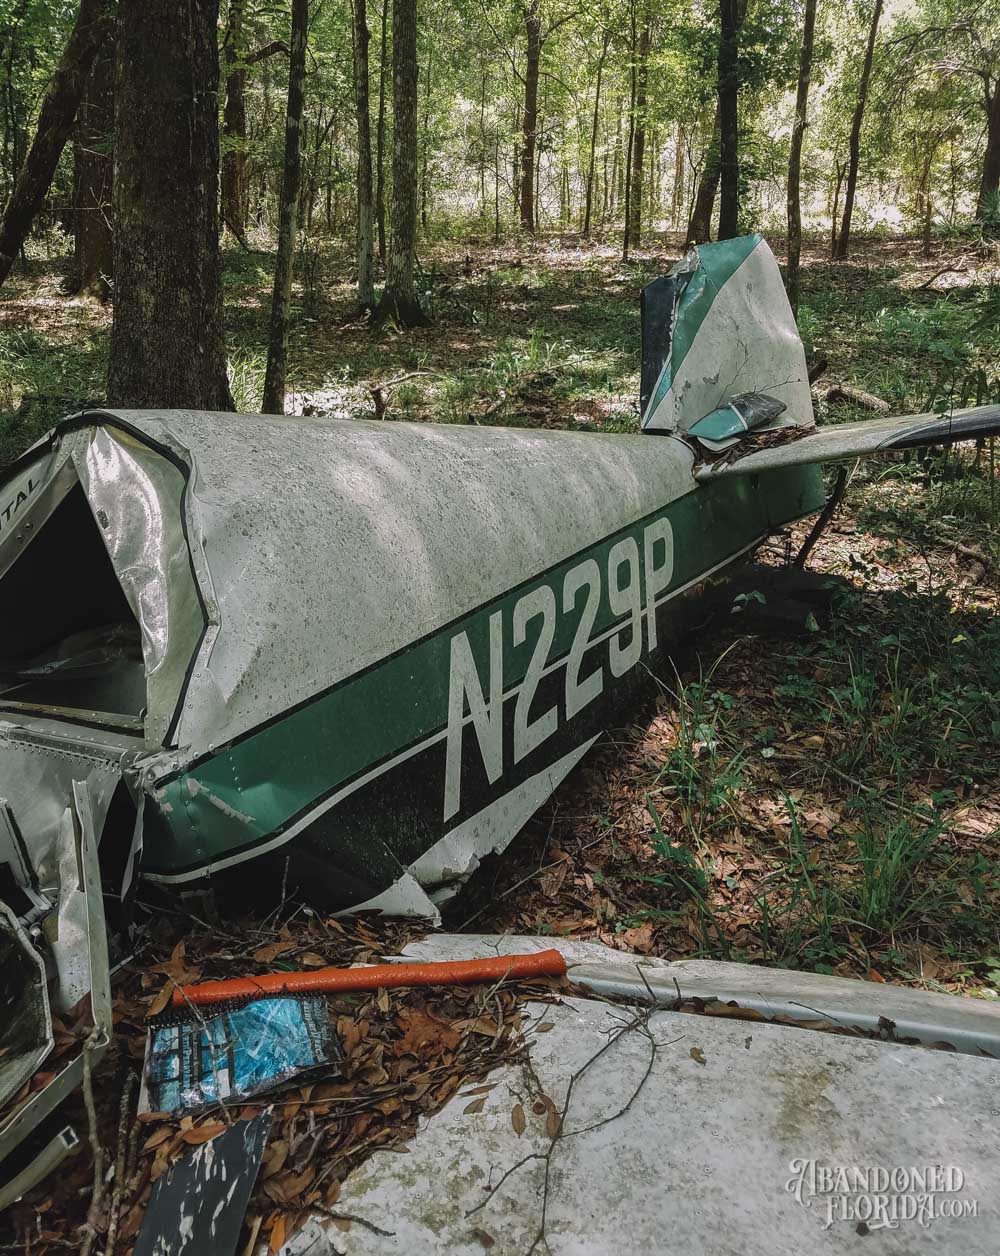 Theodore Weiss Plane Wreckage | Photo © 2017 Bullet, www.abandonedfl.com